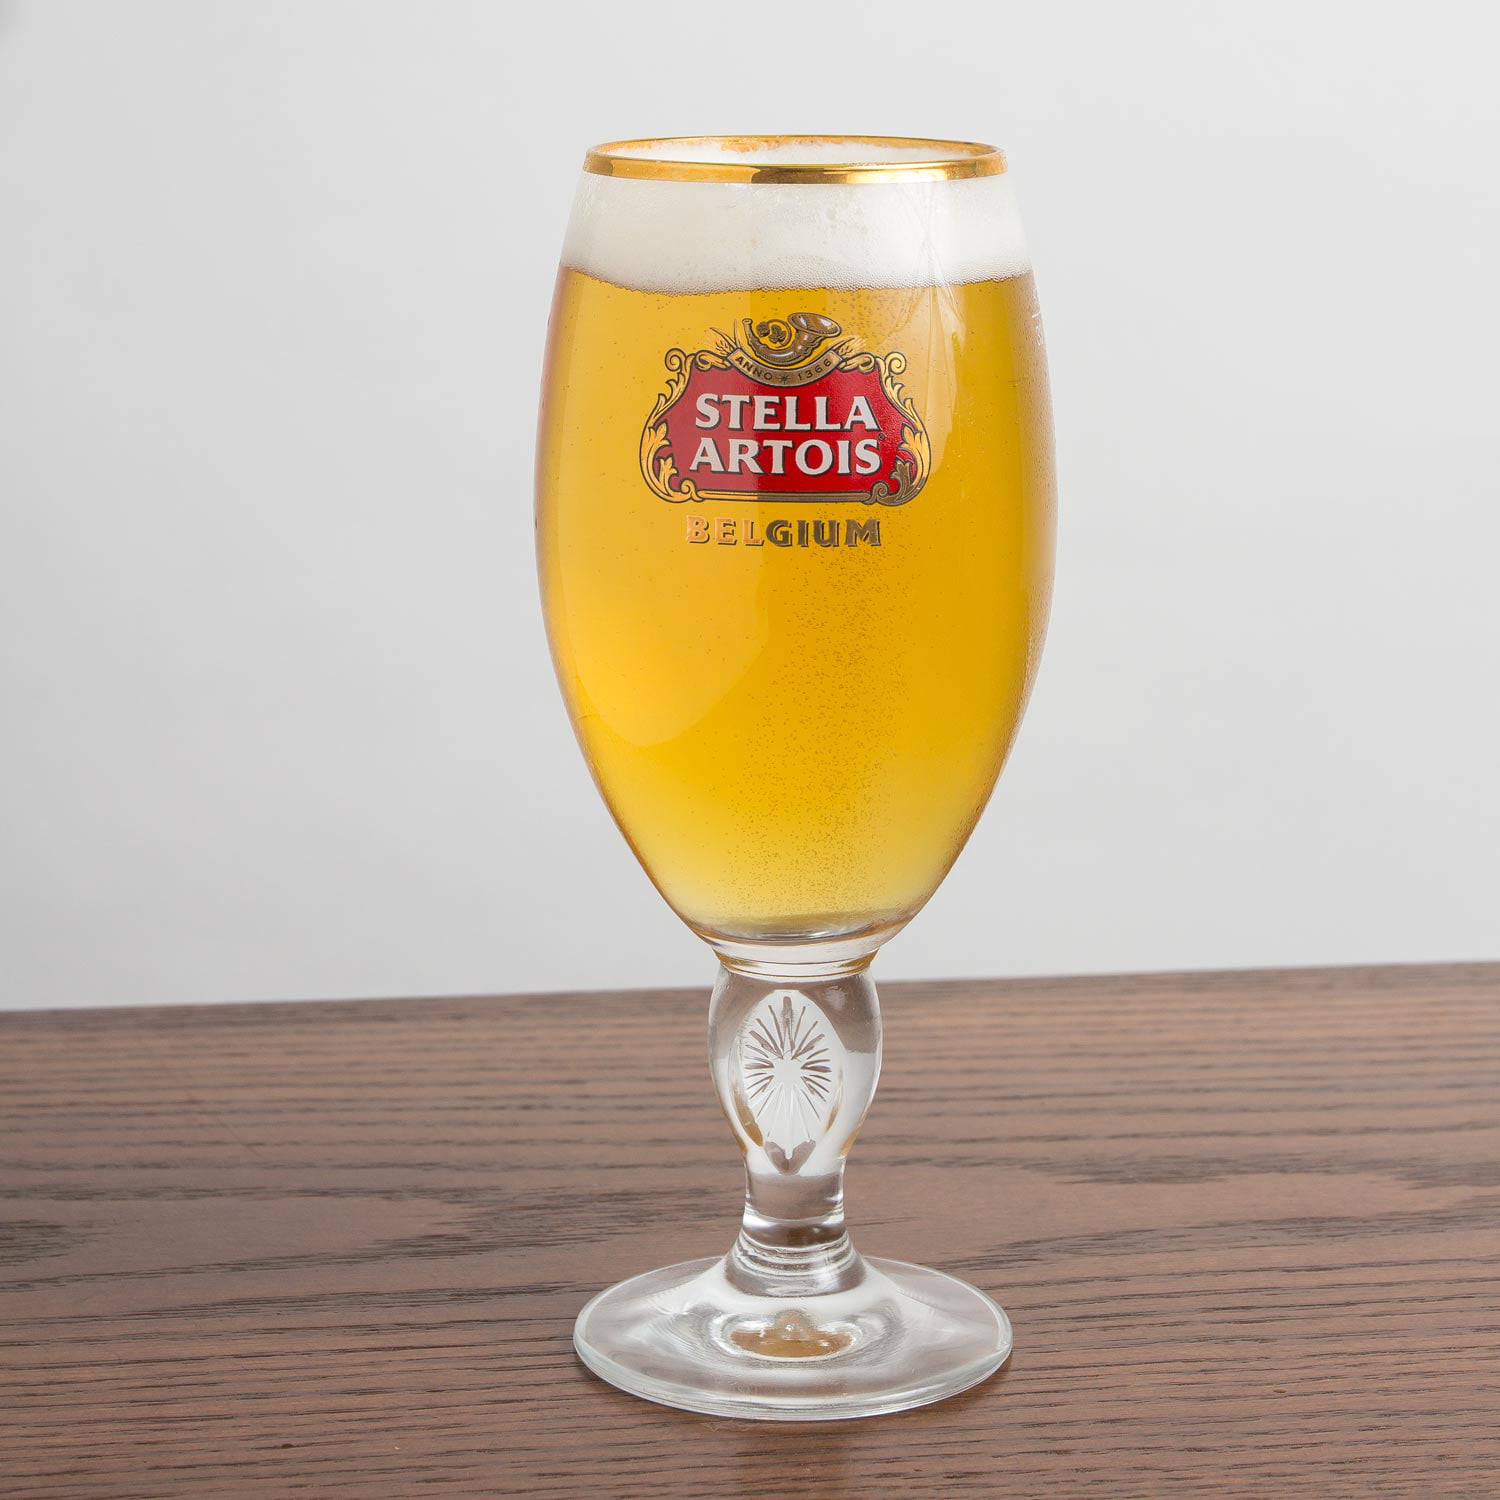 Stella Artois Pint Chalice Glass Pack (2 Glasses)